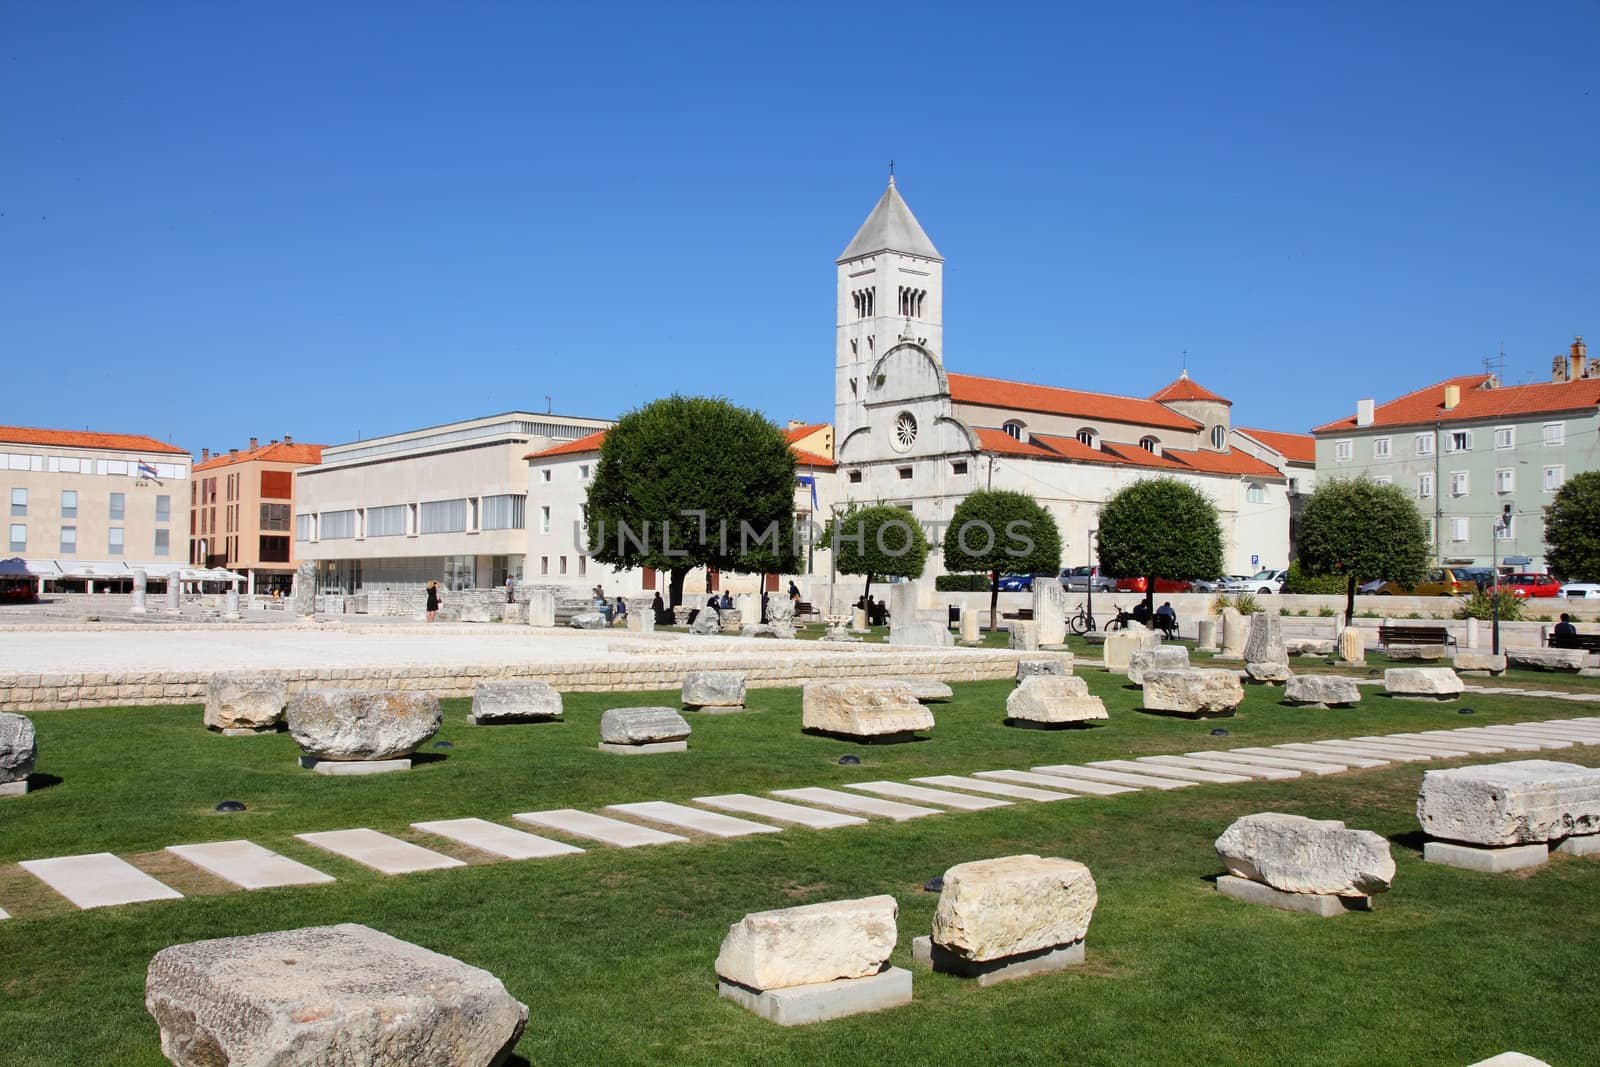 Croatia - Zadar in Dalmatia. Townscape with Roman ruins and St. Mary church.